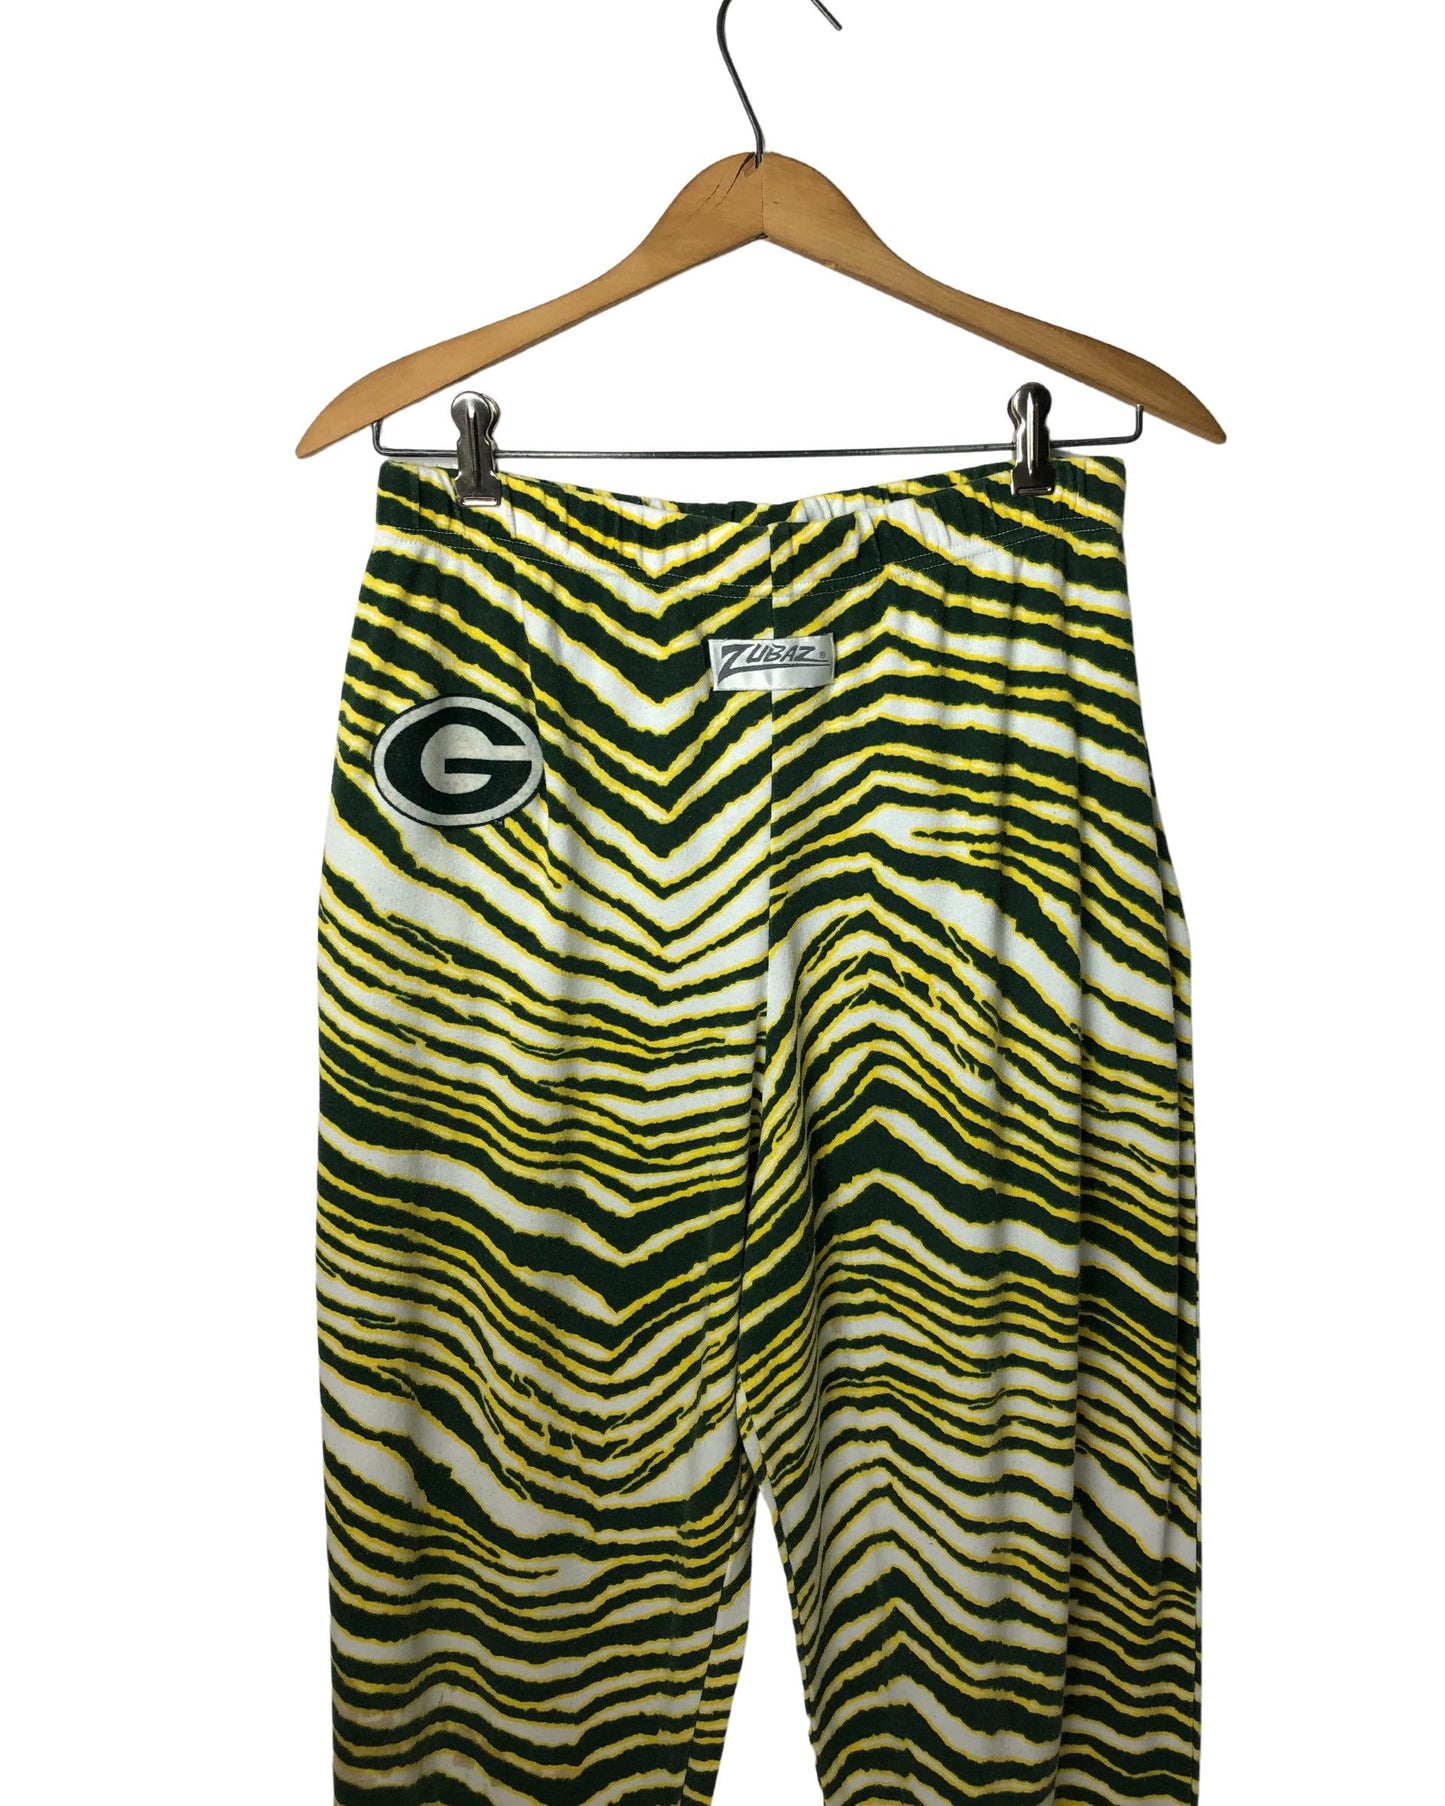 90’s Green Bay Packers Zubaz Zebra Print Sweatpants Size Large